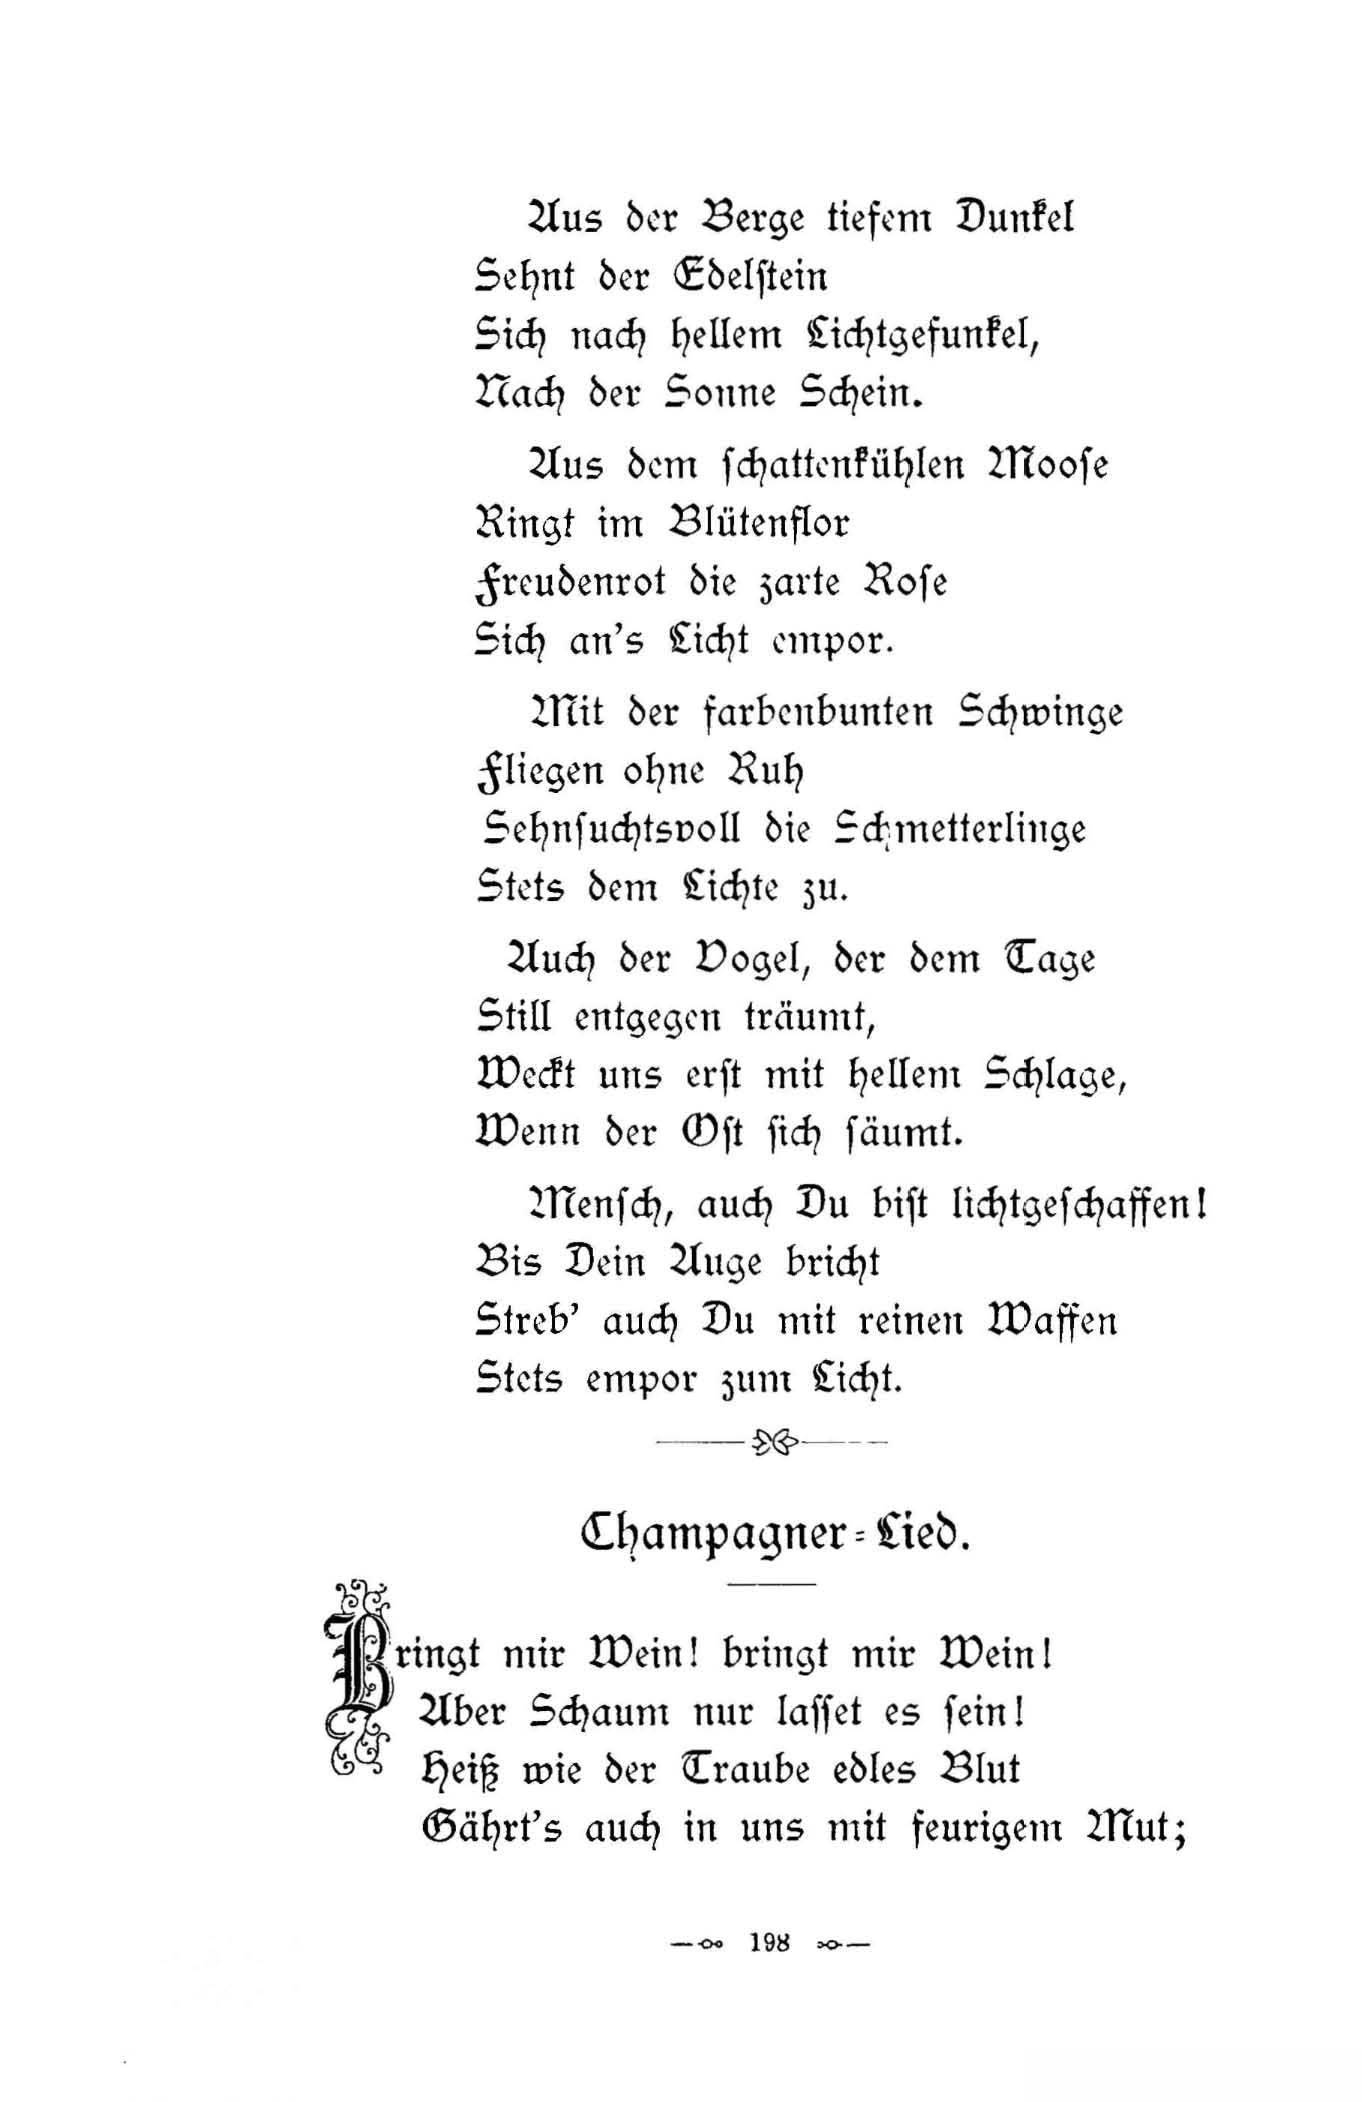 Champagner-Lied (1896) | 1. (198) Основной текст